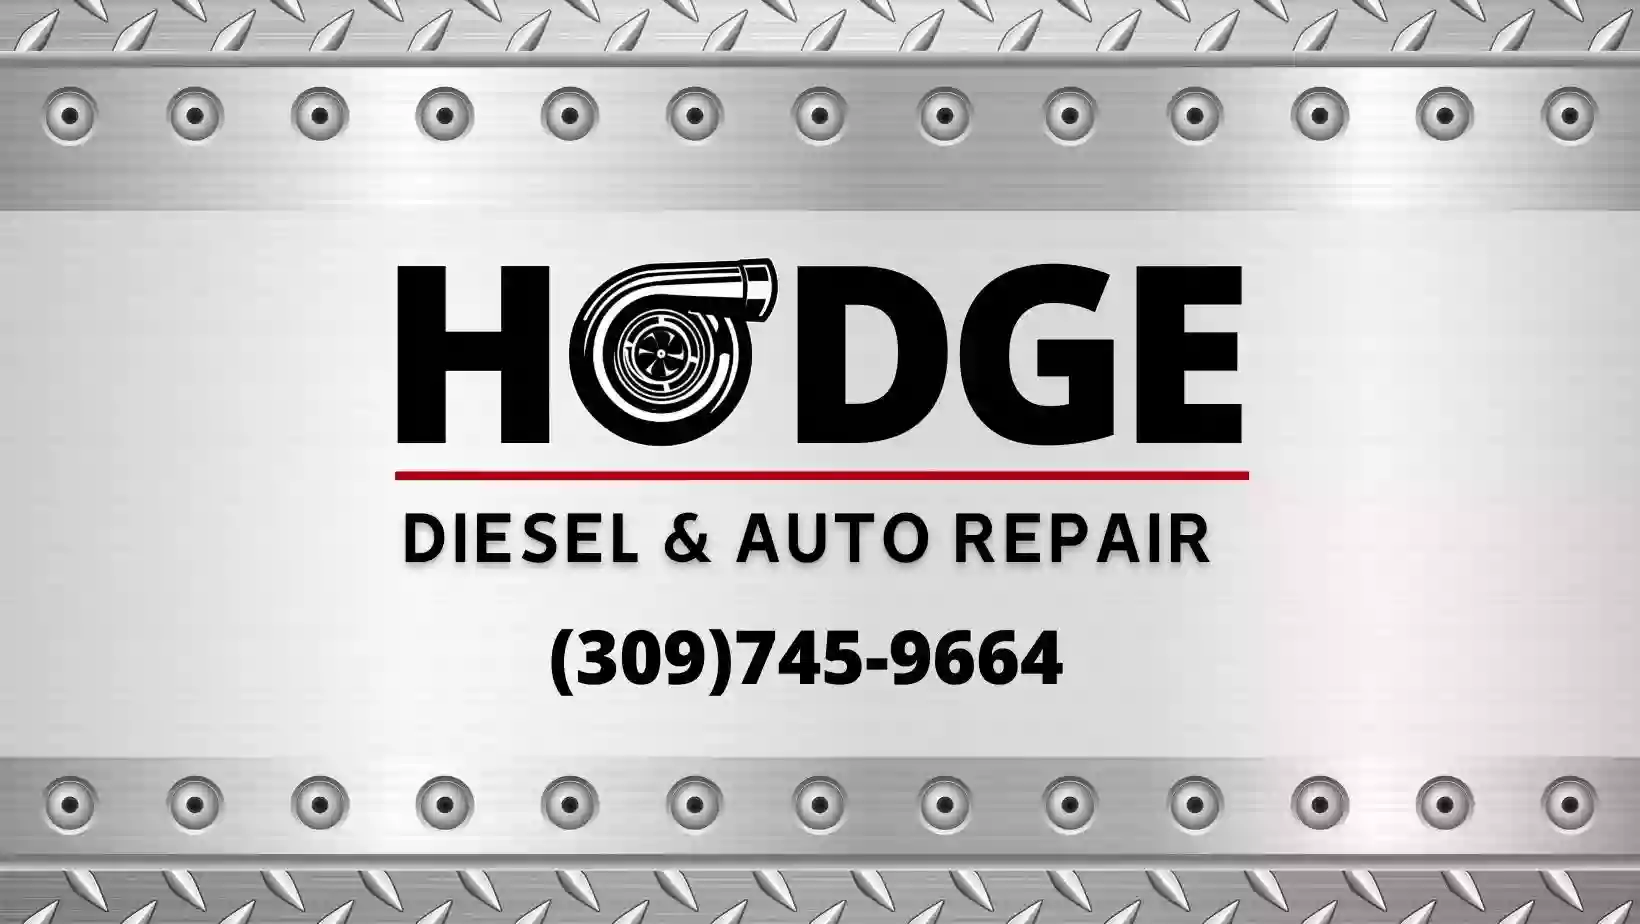 Hodge Diesel & Auto Repair